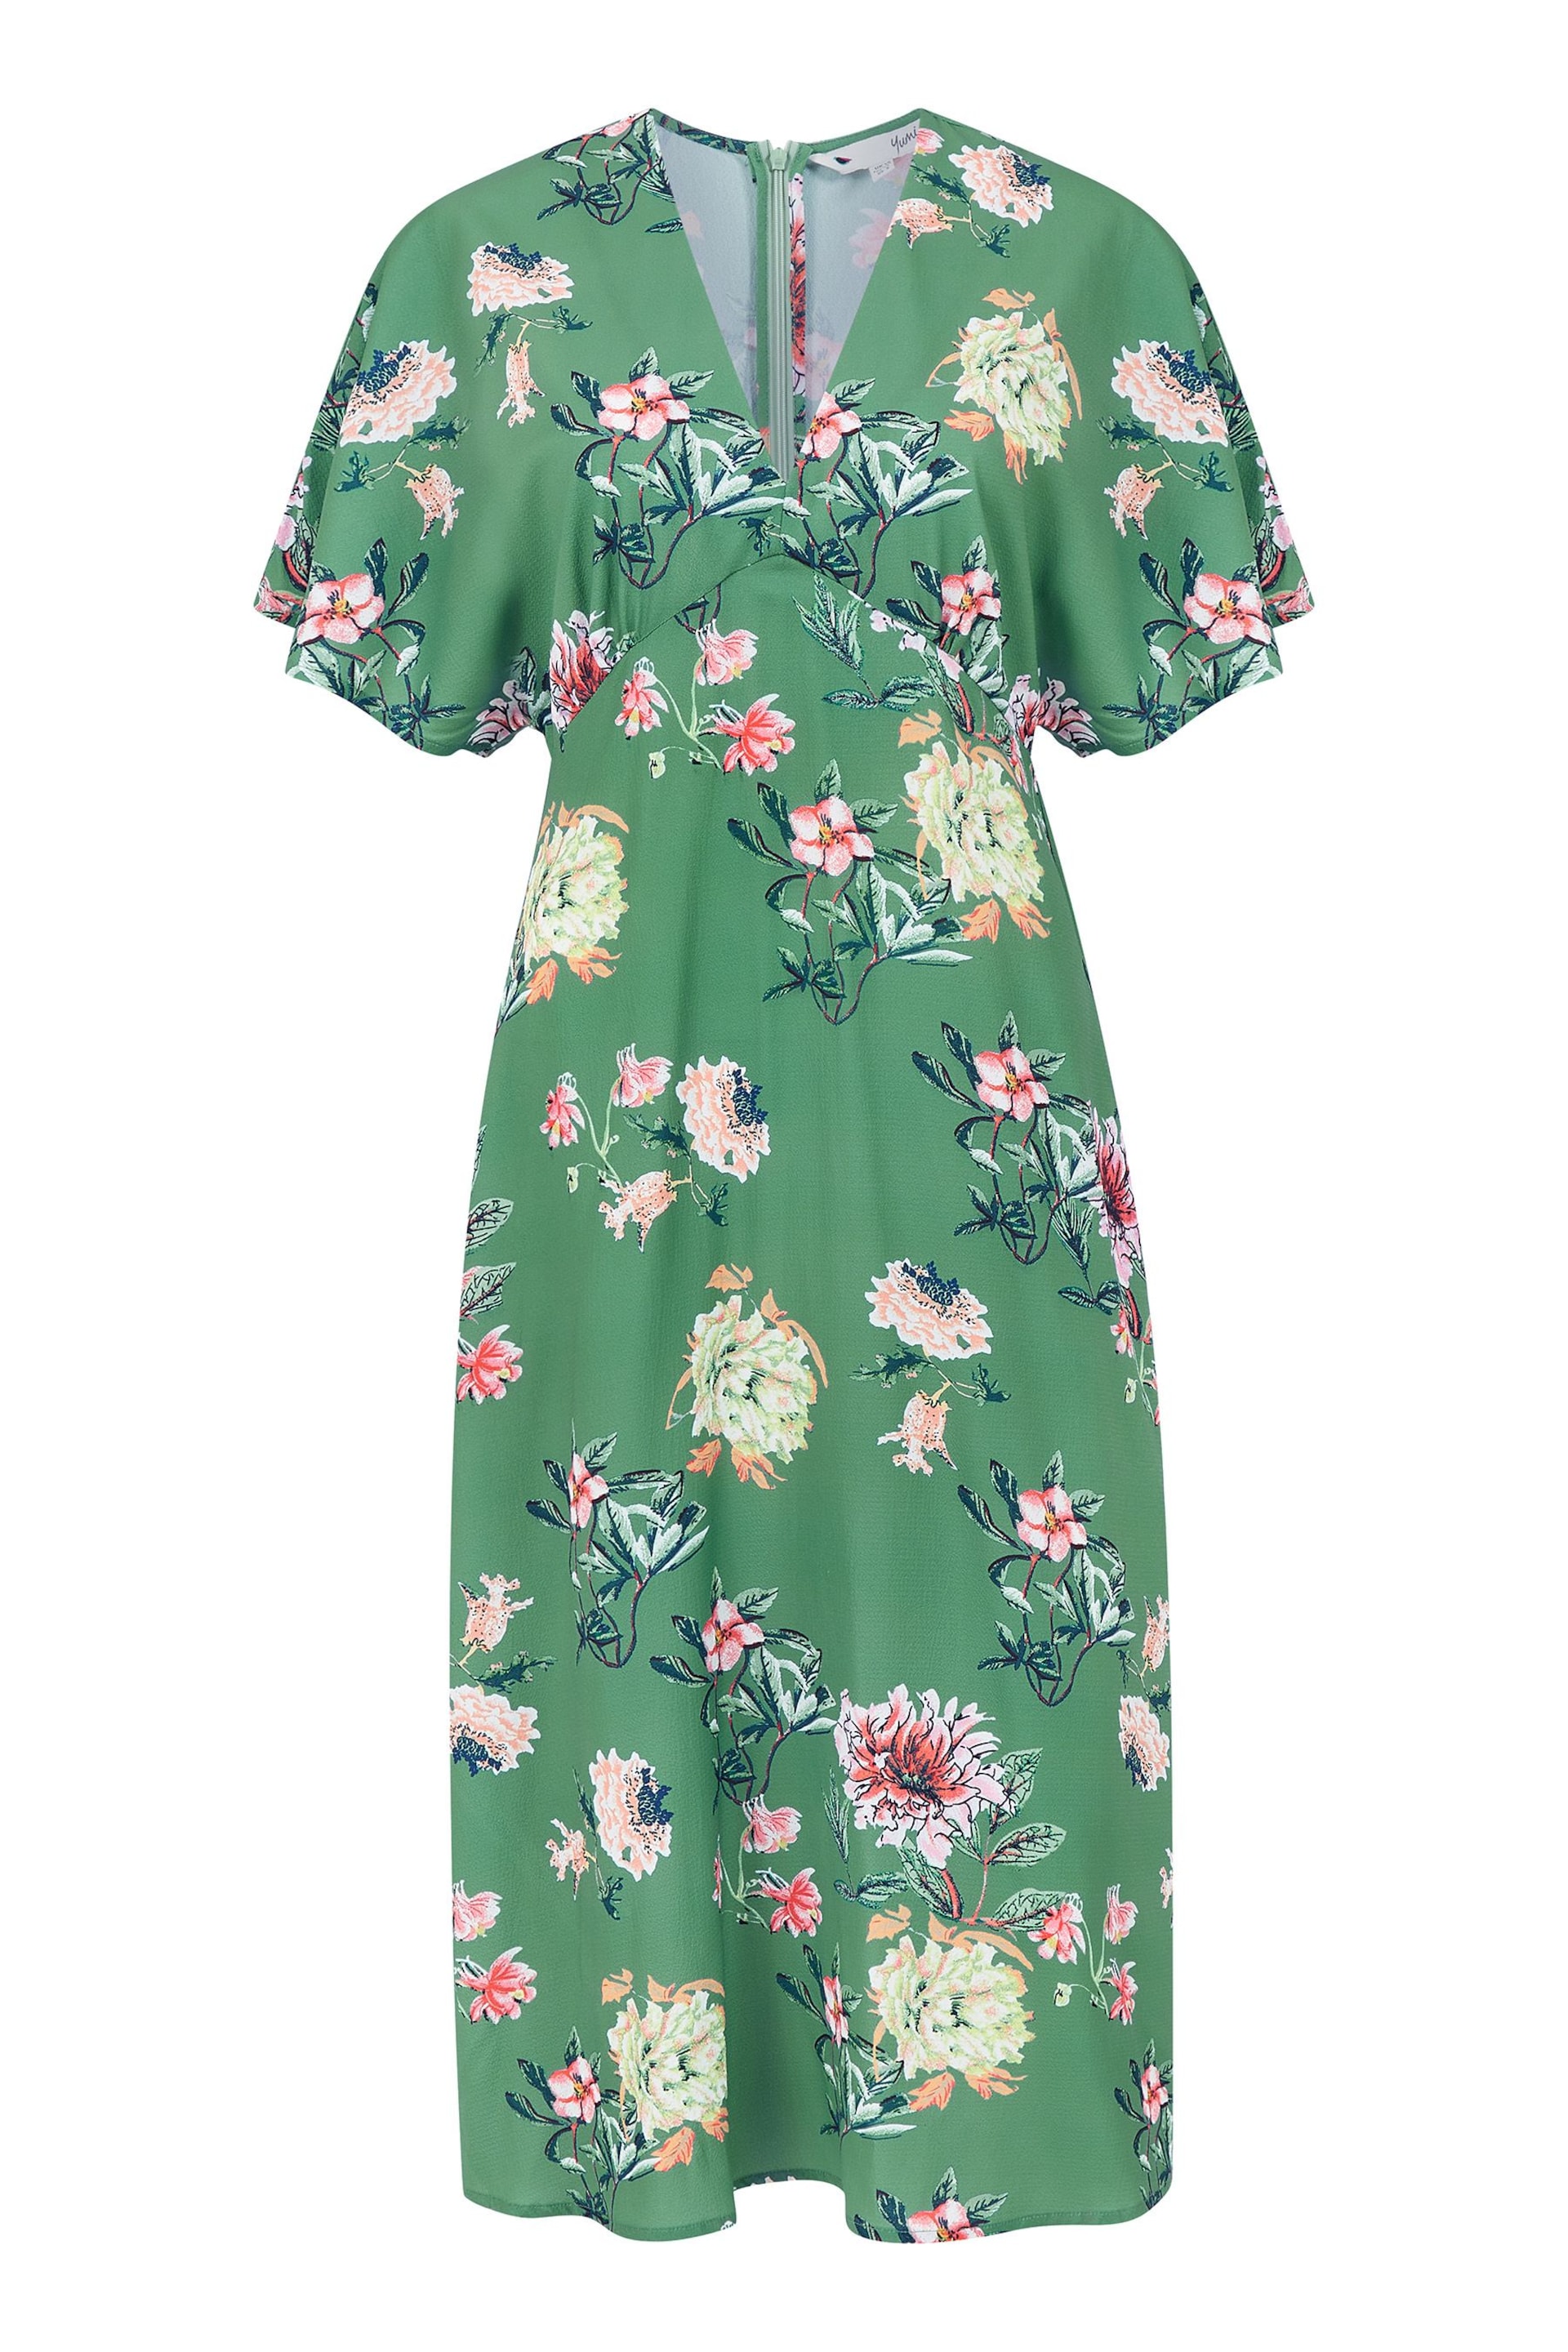 Yumi Green Yumi Blue Floral Blossom Print Kimono Dress - Image 5 of 5